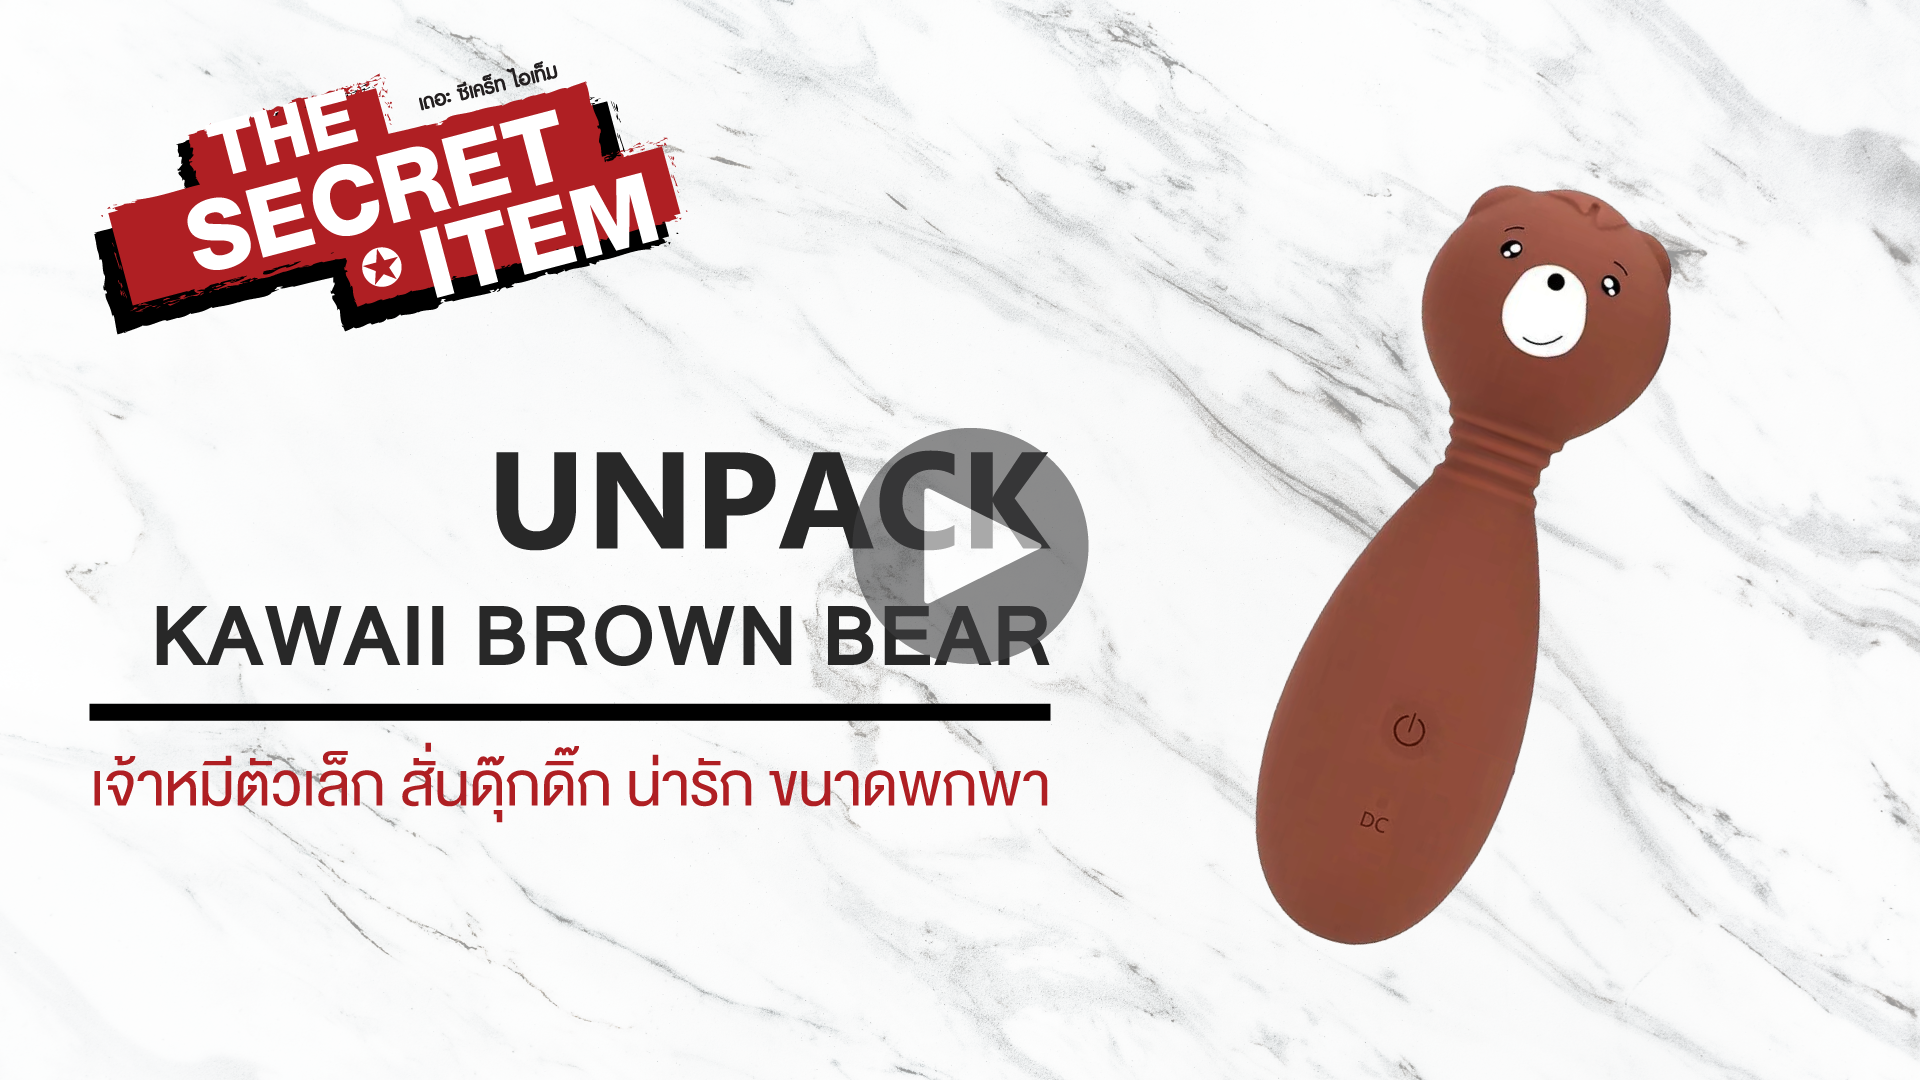 THE SECRET ITEM - Unpack | แกะกล่อง KAWAII BROWN BEAR ต้าวหมีตัวป่วน